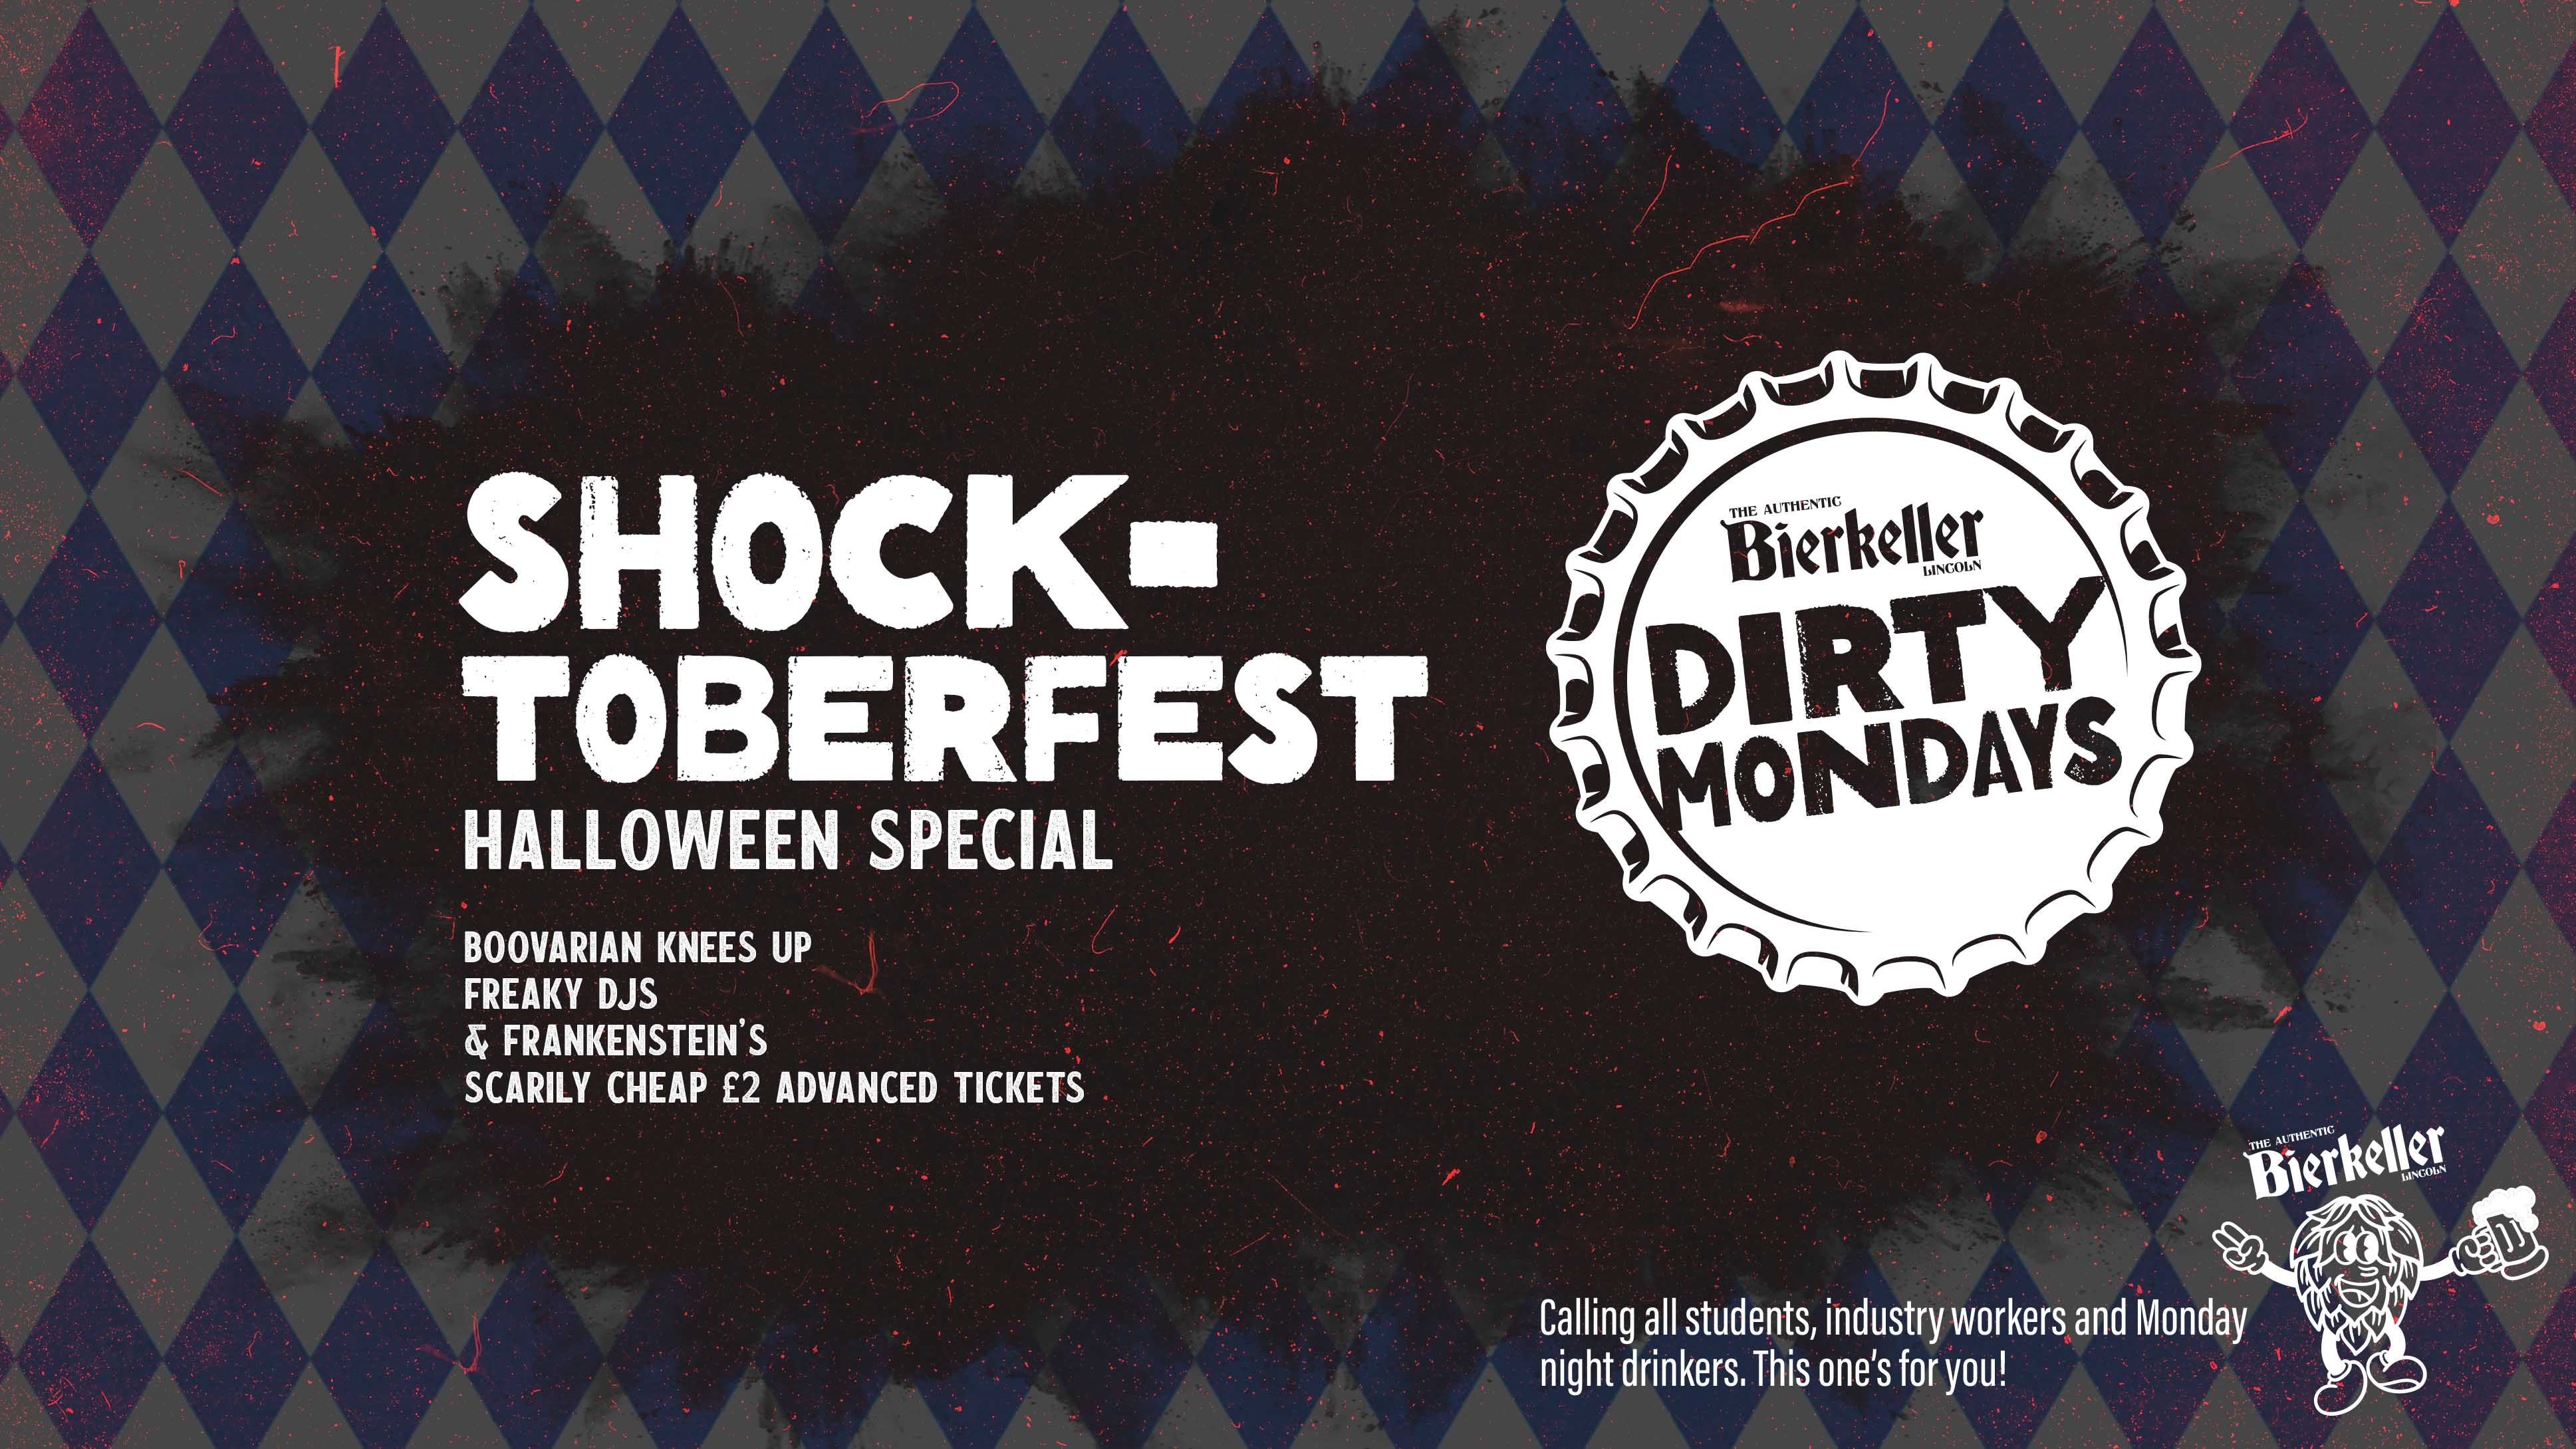 Shocktoberfest – Dirty Monday’s at Bierkeller